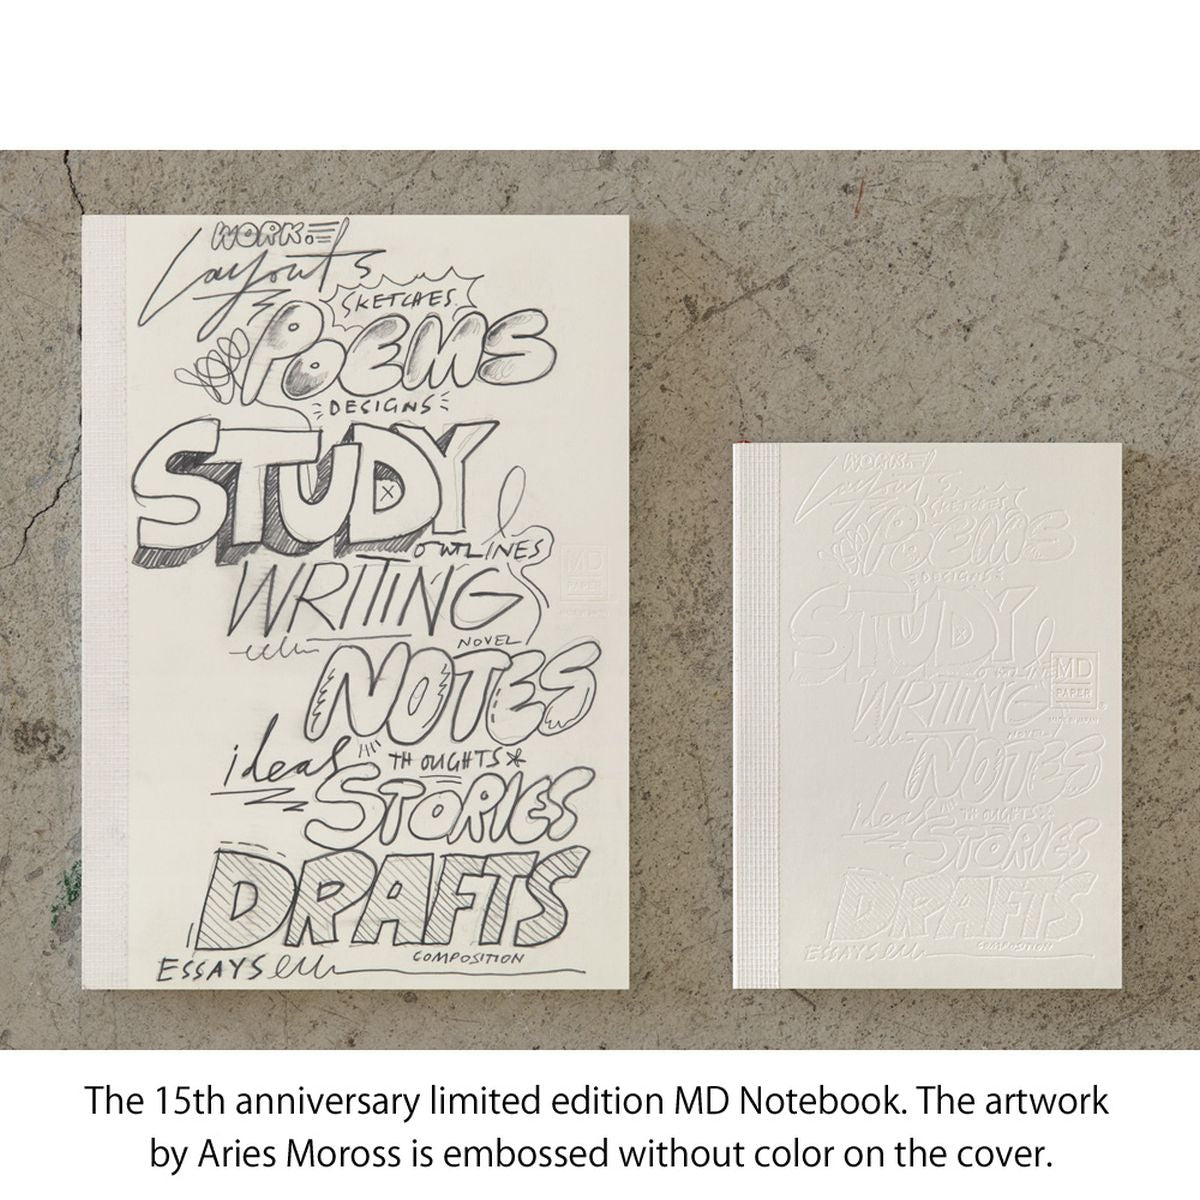 Midori 15th Limited Edition MD Artist Notebooks (6)